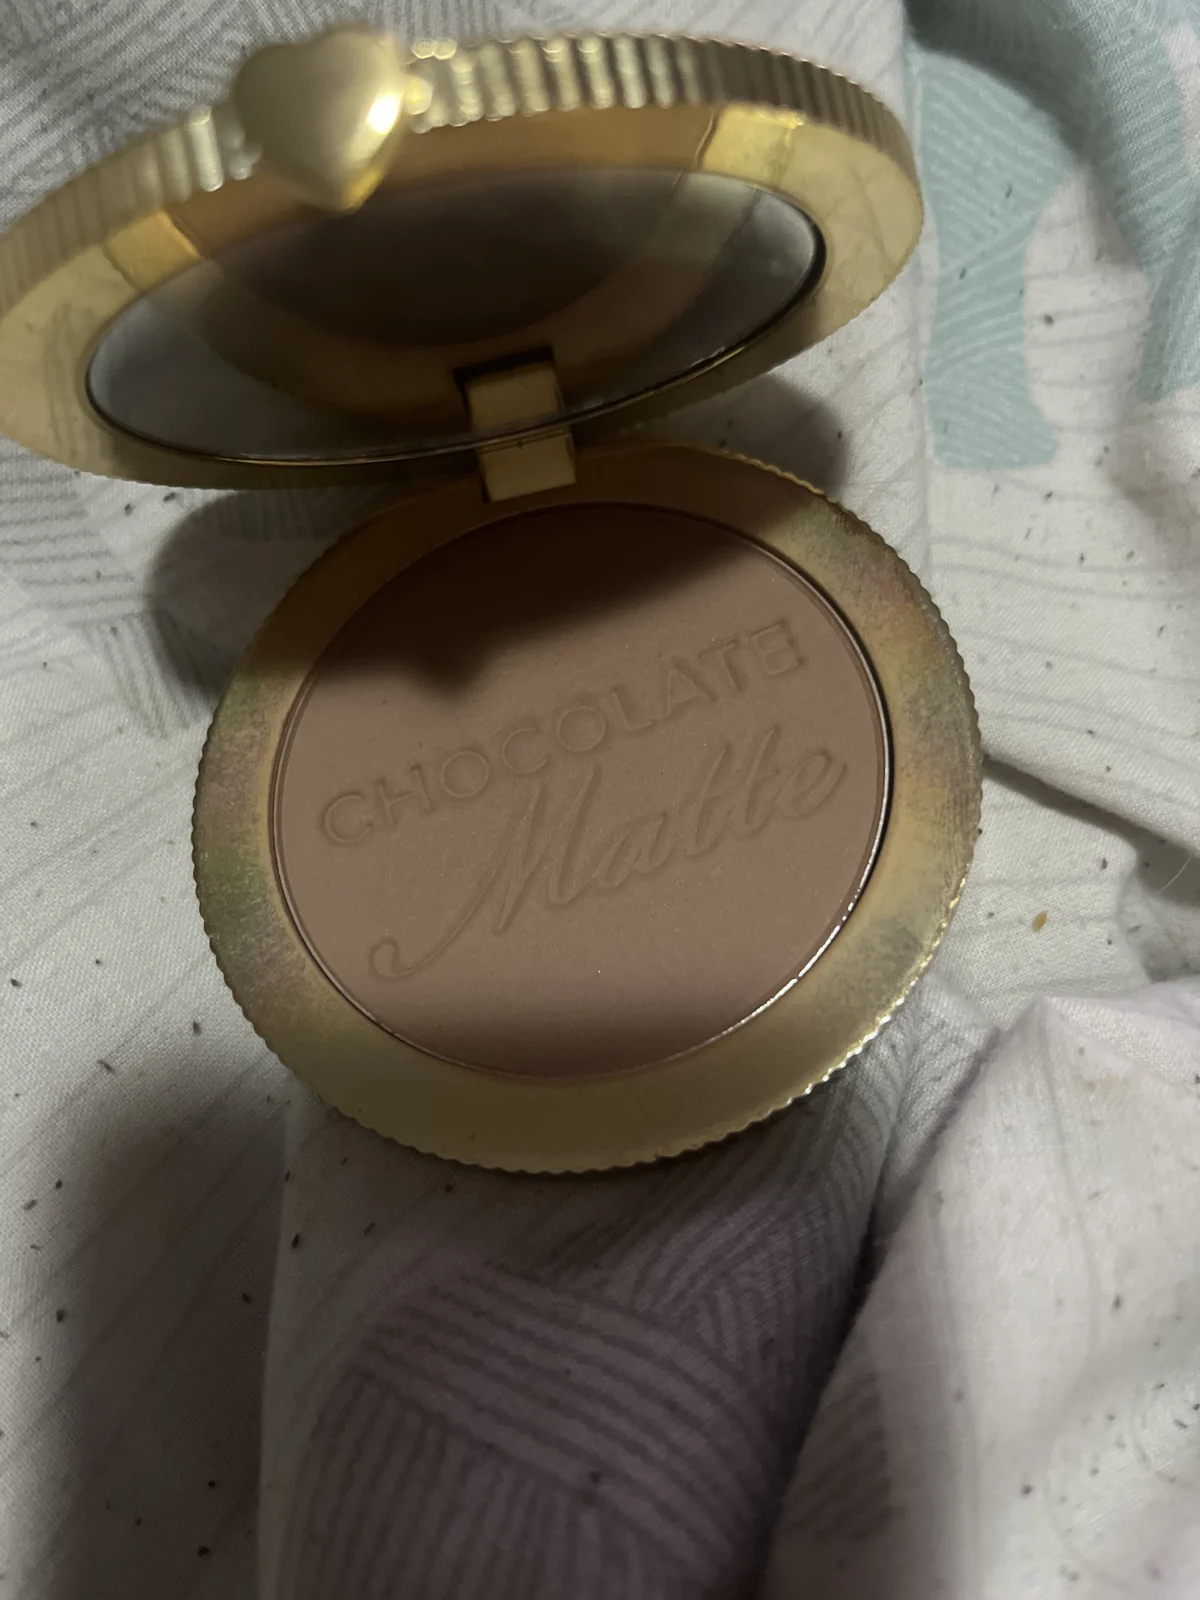 Chocolate Soleil Matte Bronzer - review image